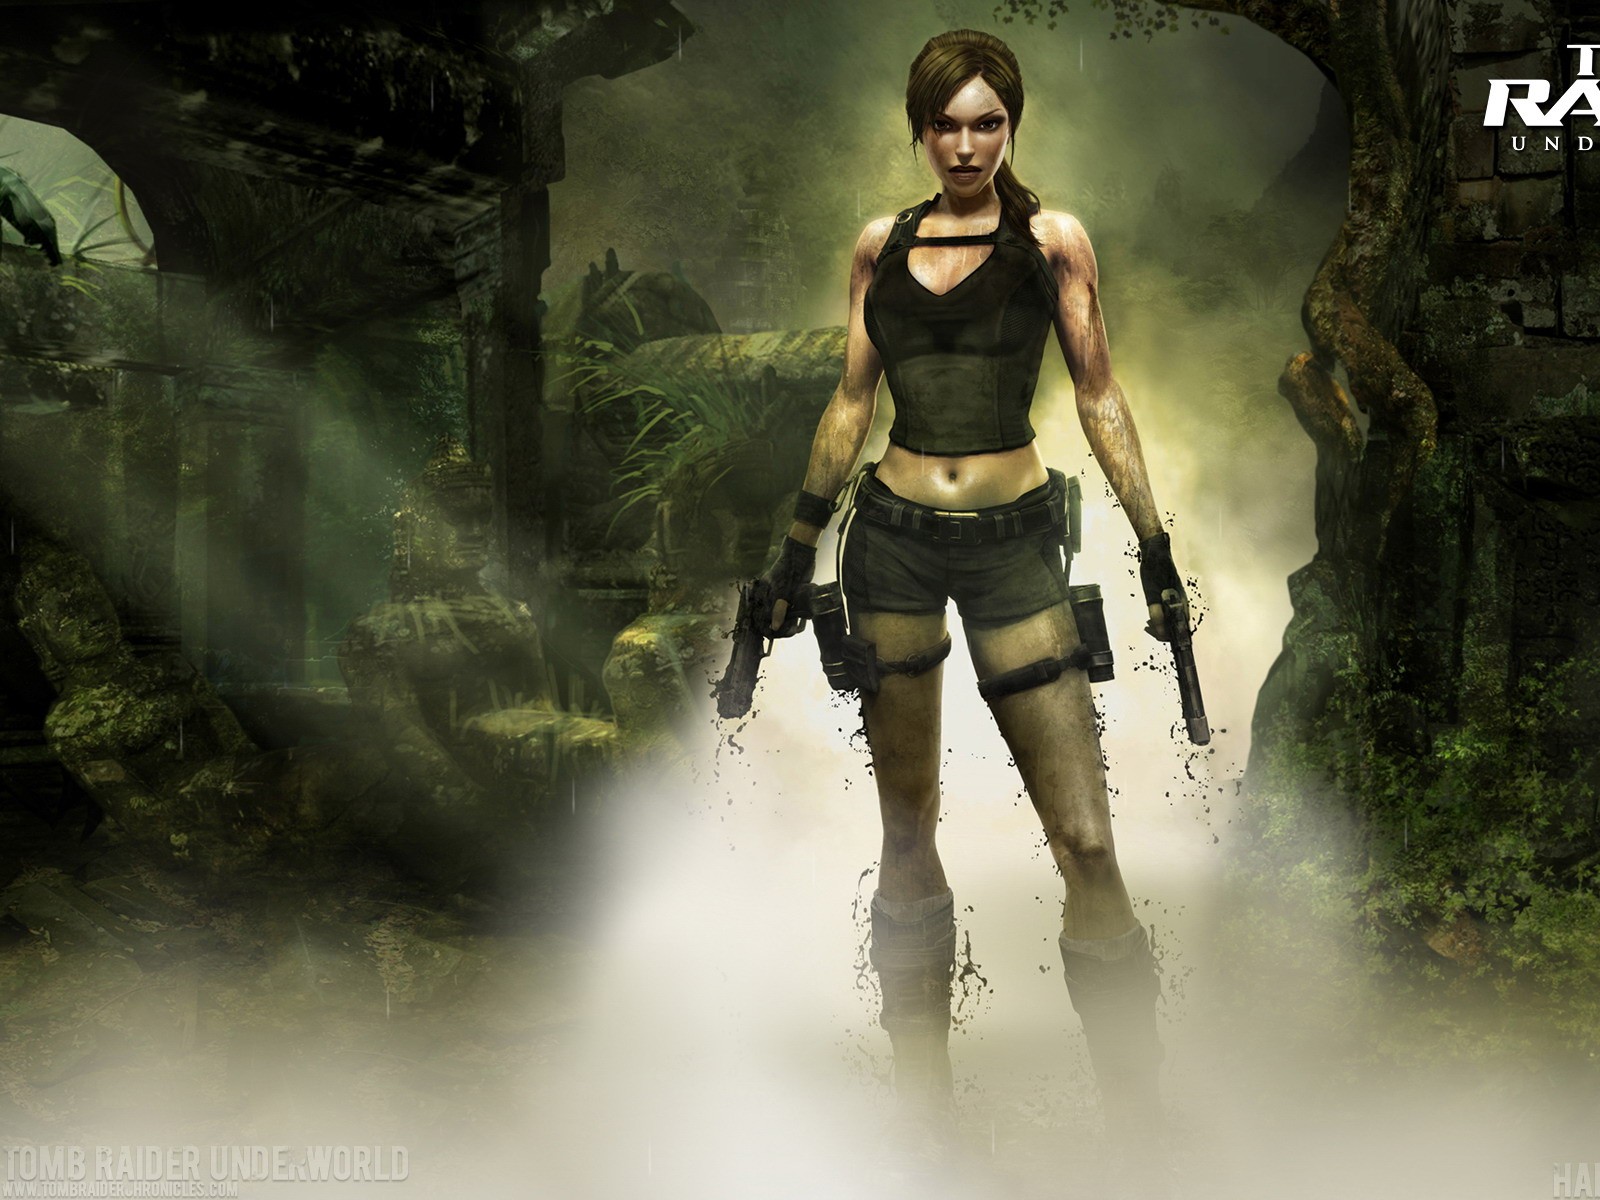 Lara Croft Tomb Raider Underworld 8 #10 - 1600x1200